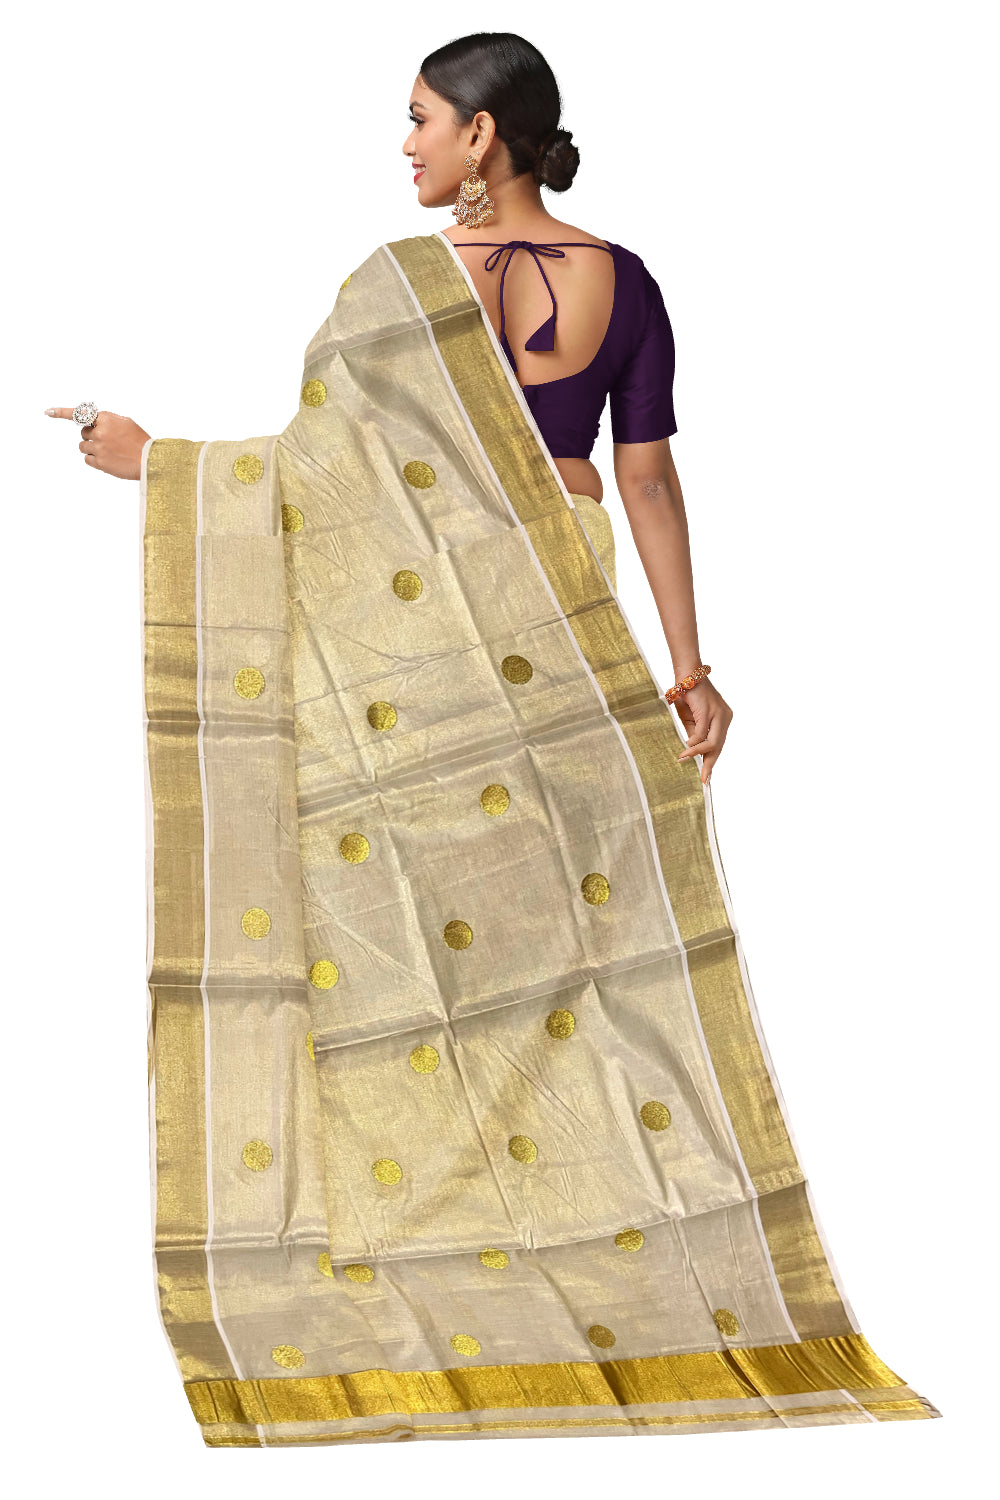 Kerala Tissue Kasavu Saree with Golden Polka Works Across Body